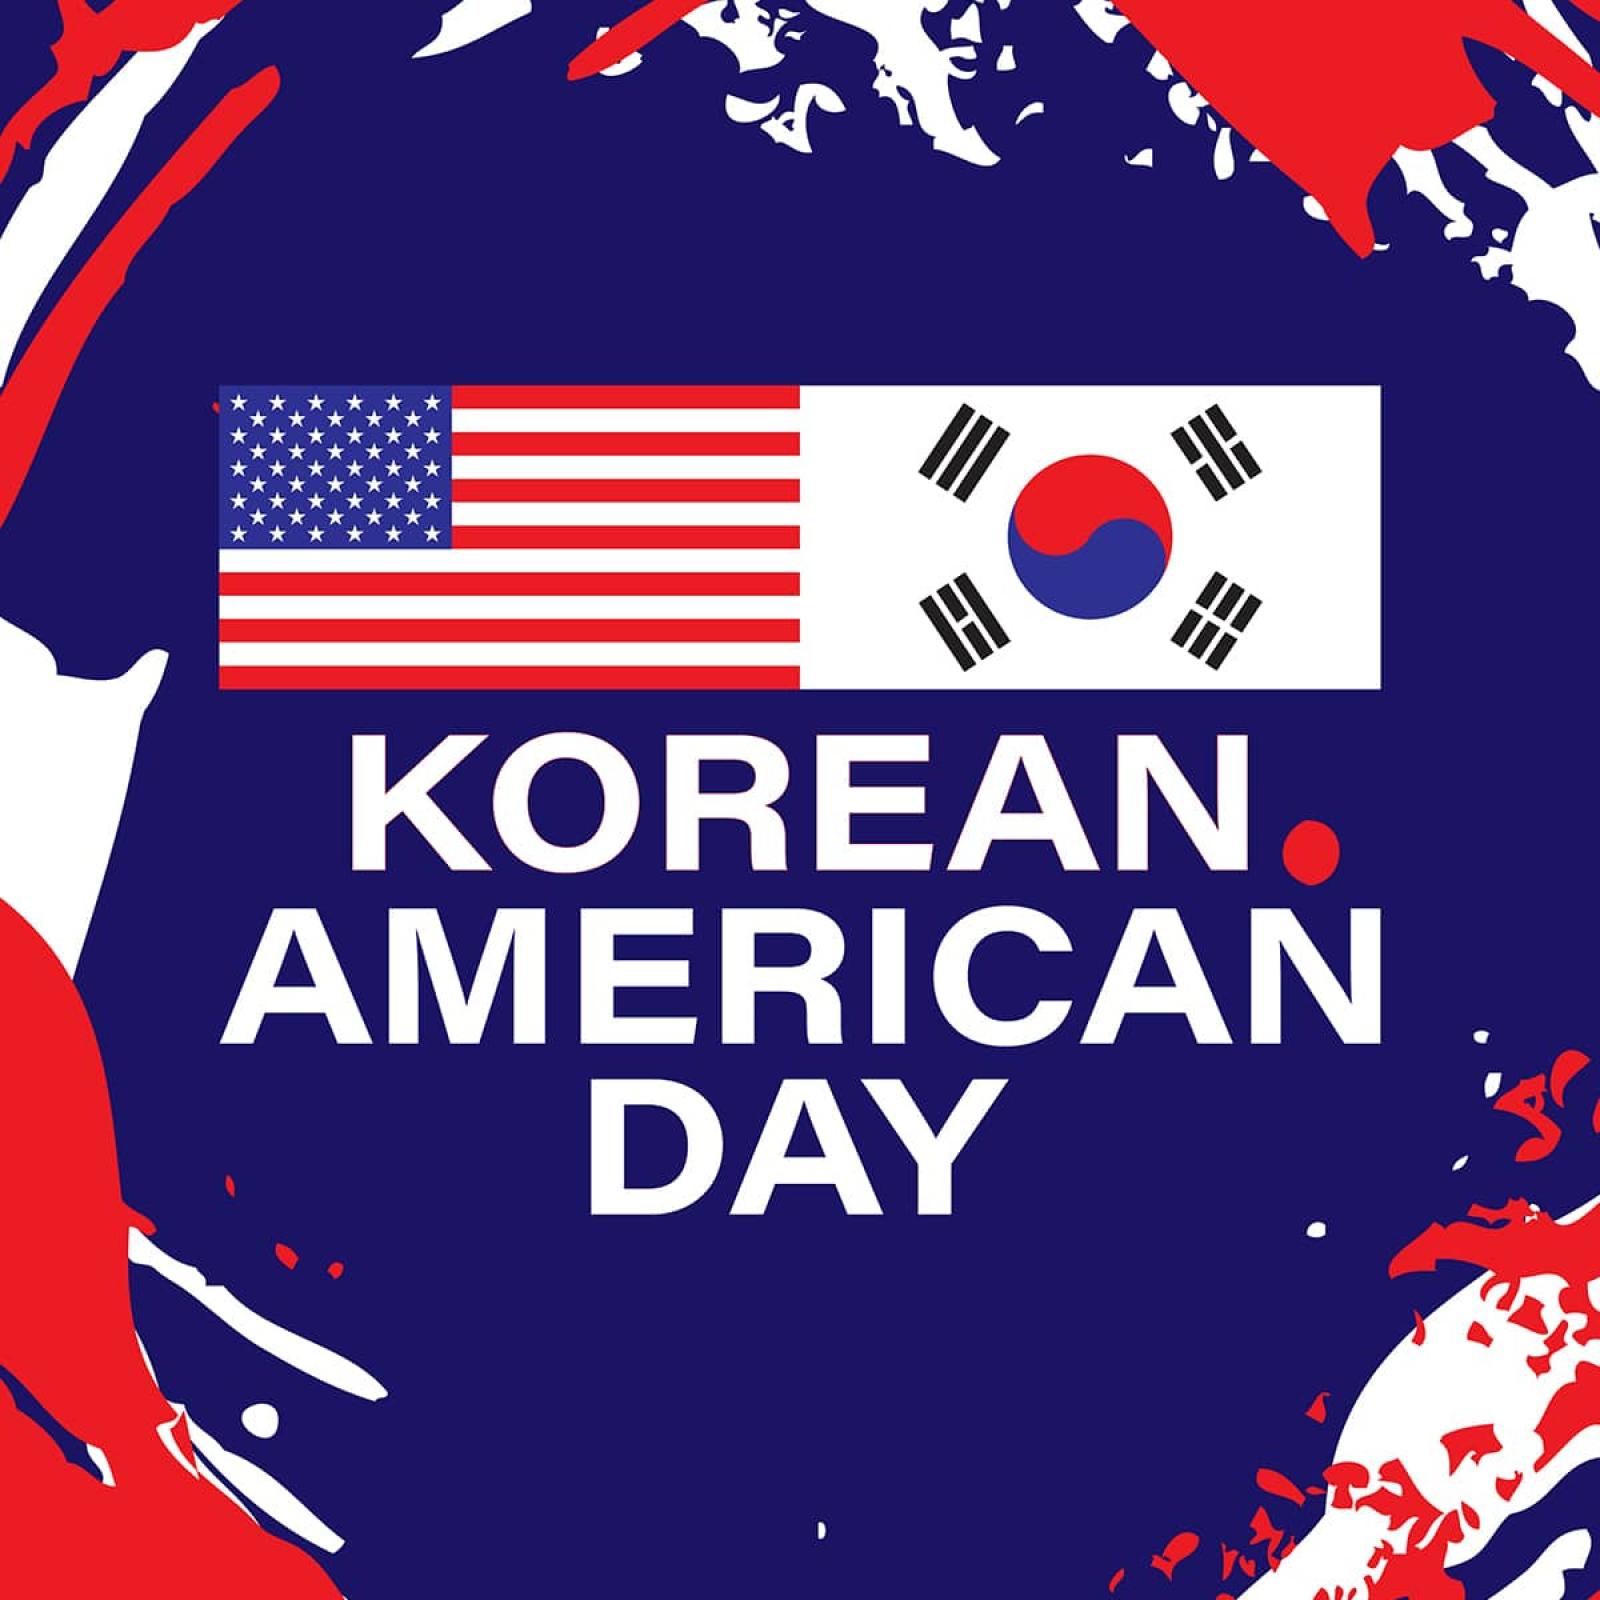 American & Korean flags